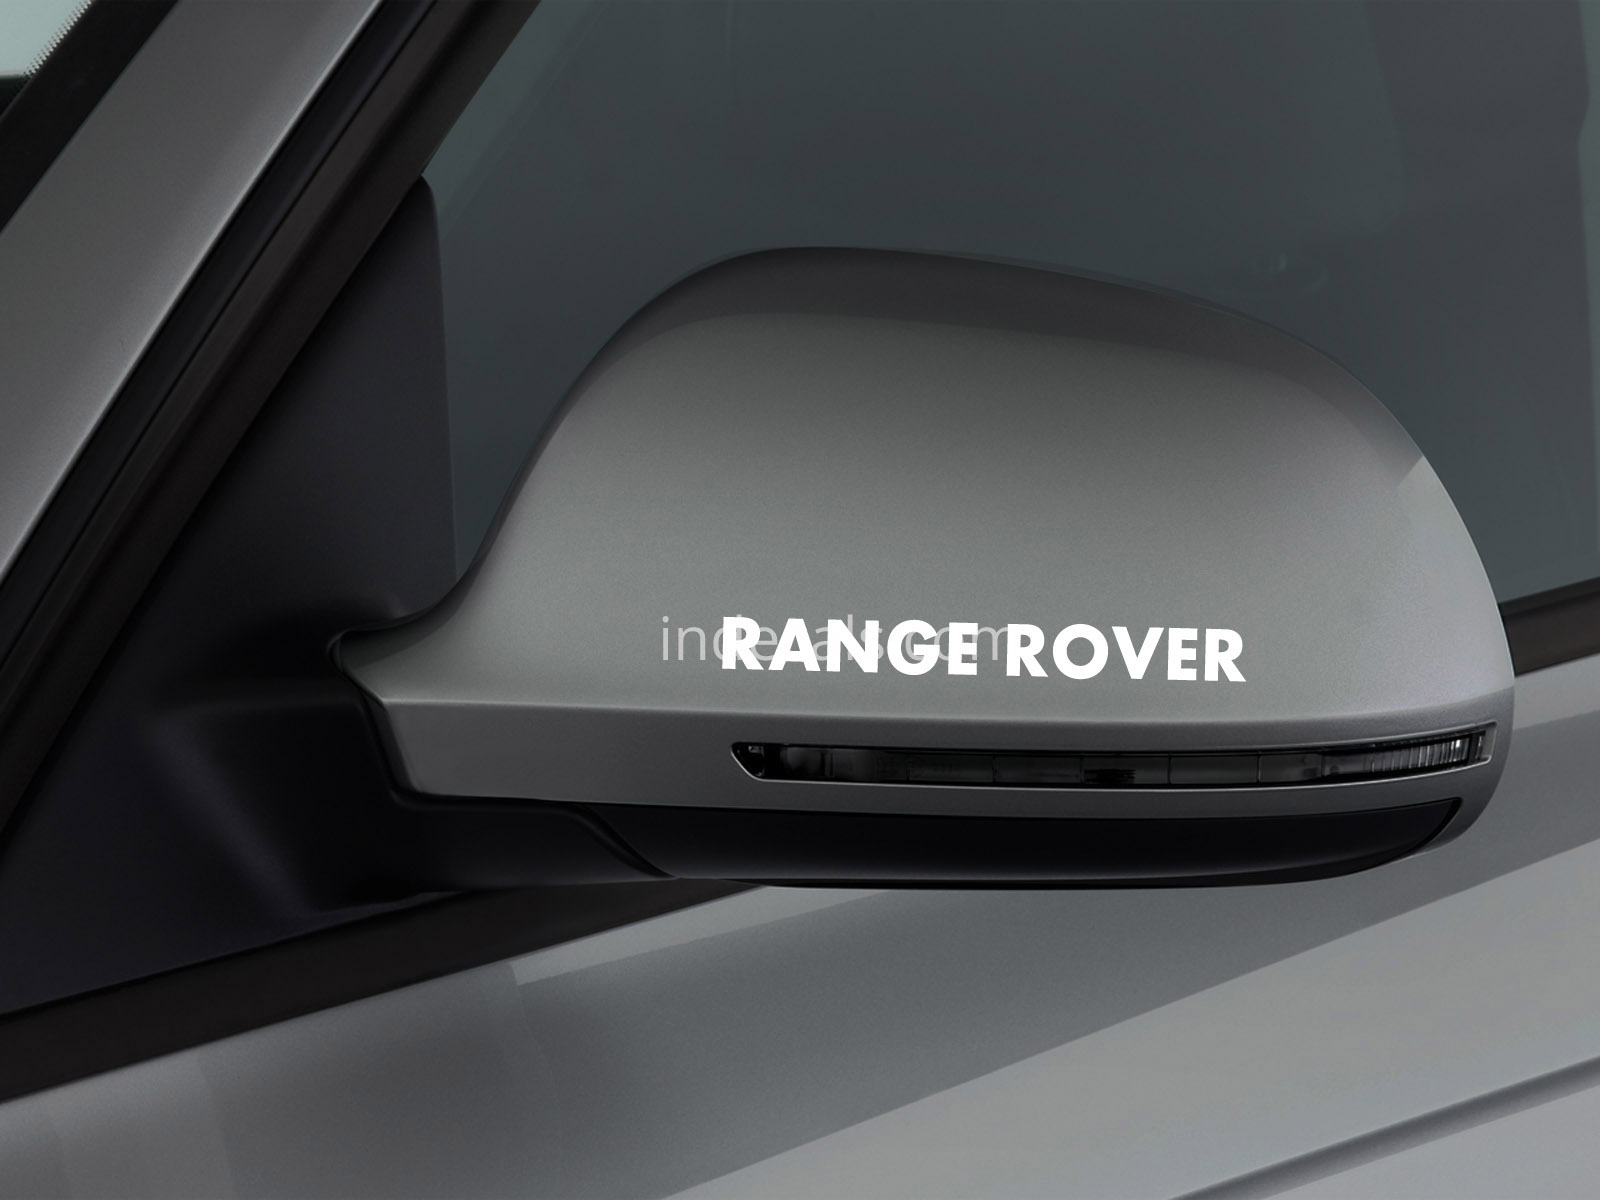 3 x Range Rover Stickers for Mirror - White